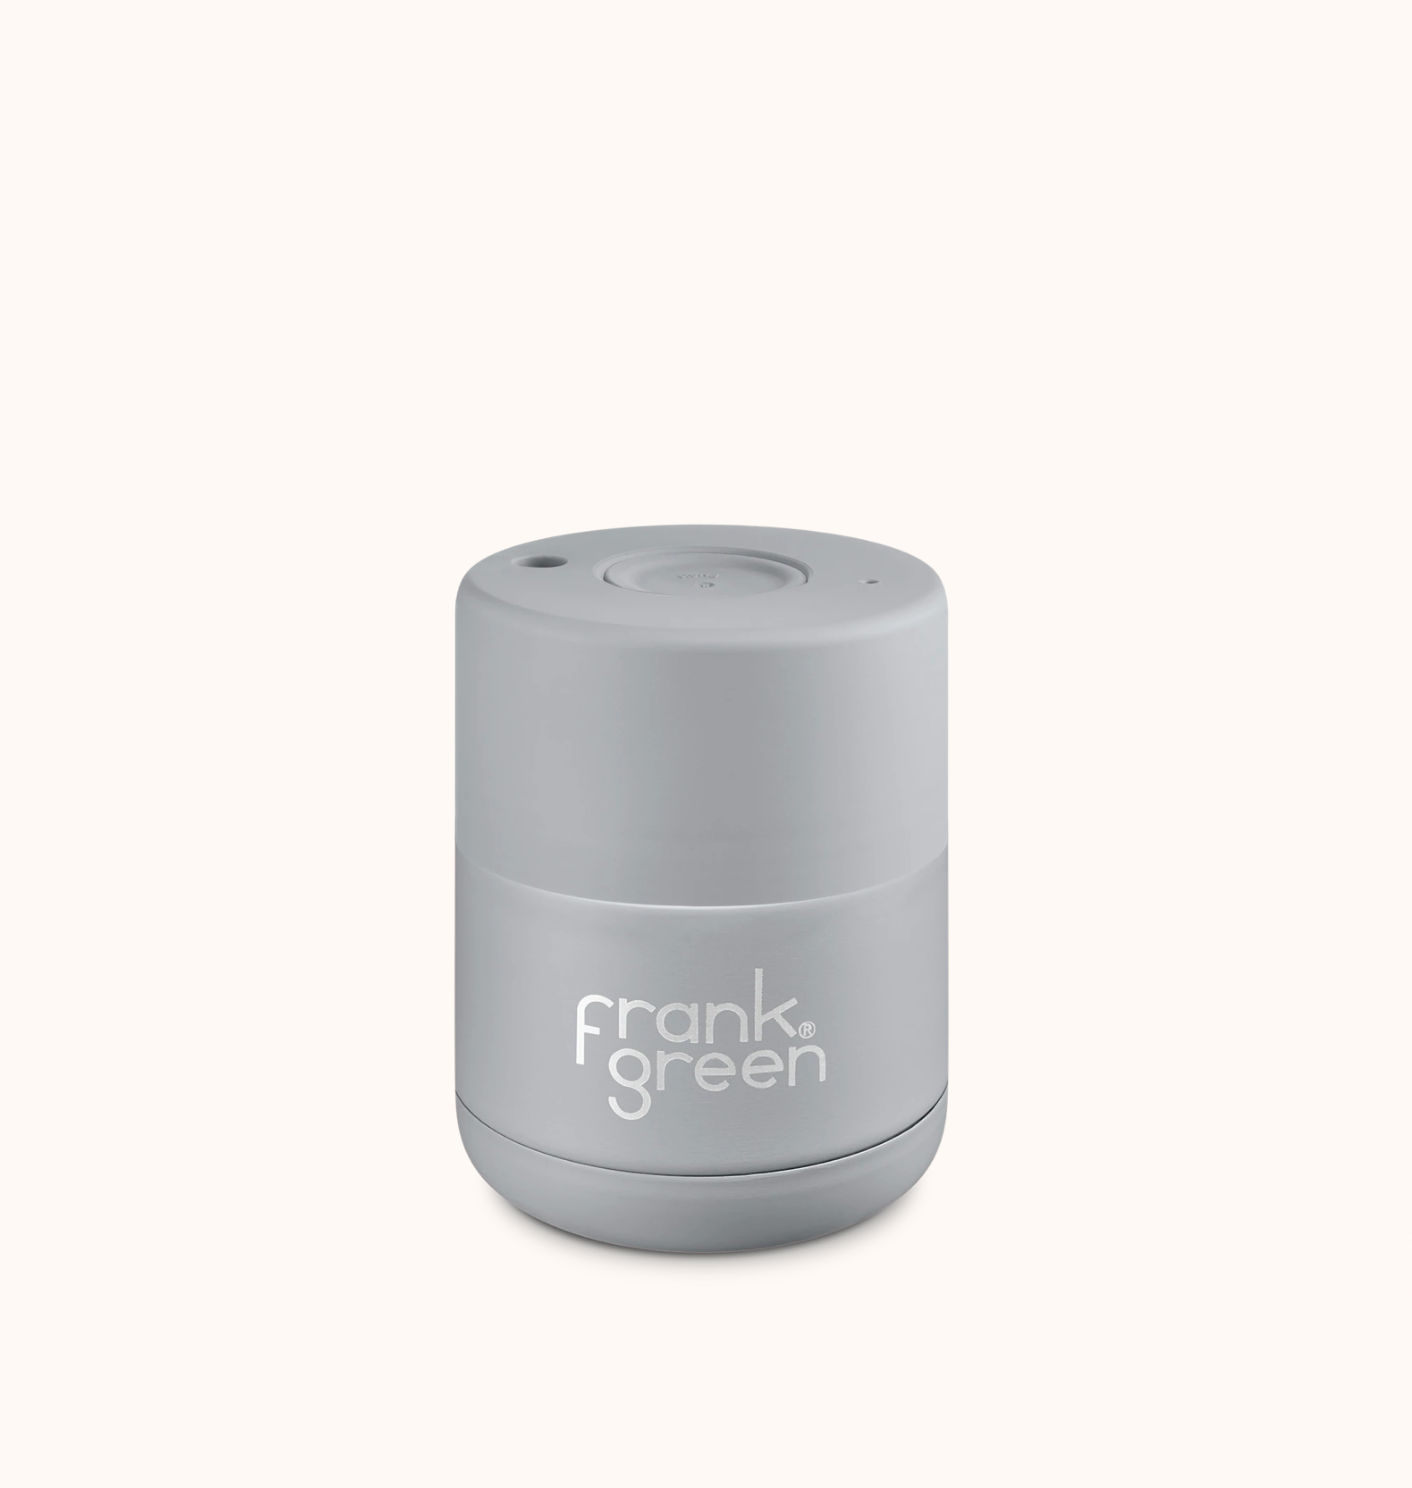 Frank Green Ceramic Reusable Cup 6oz, 10oz Or 16oz, Harbor Mist (Push Button Lid)